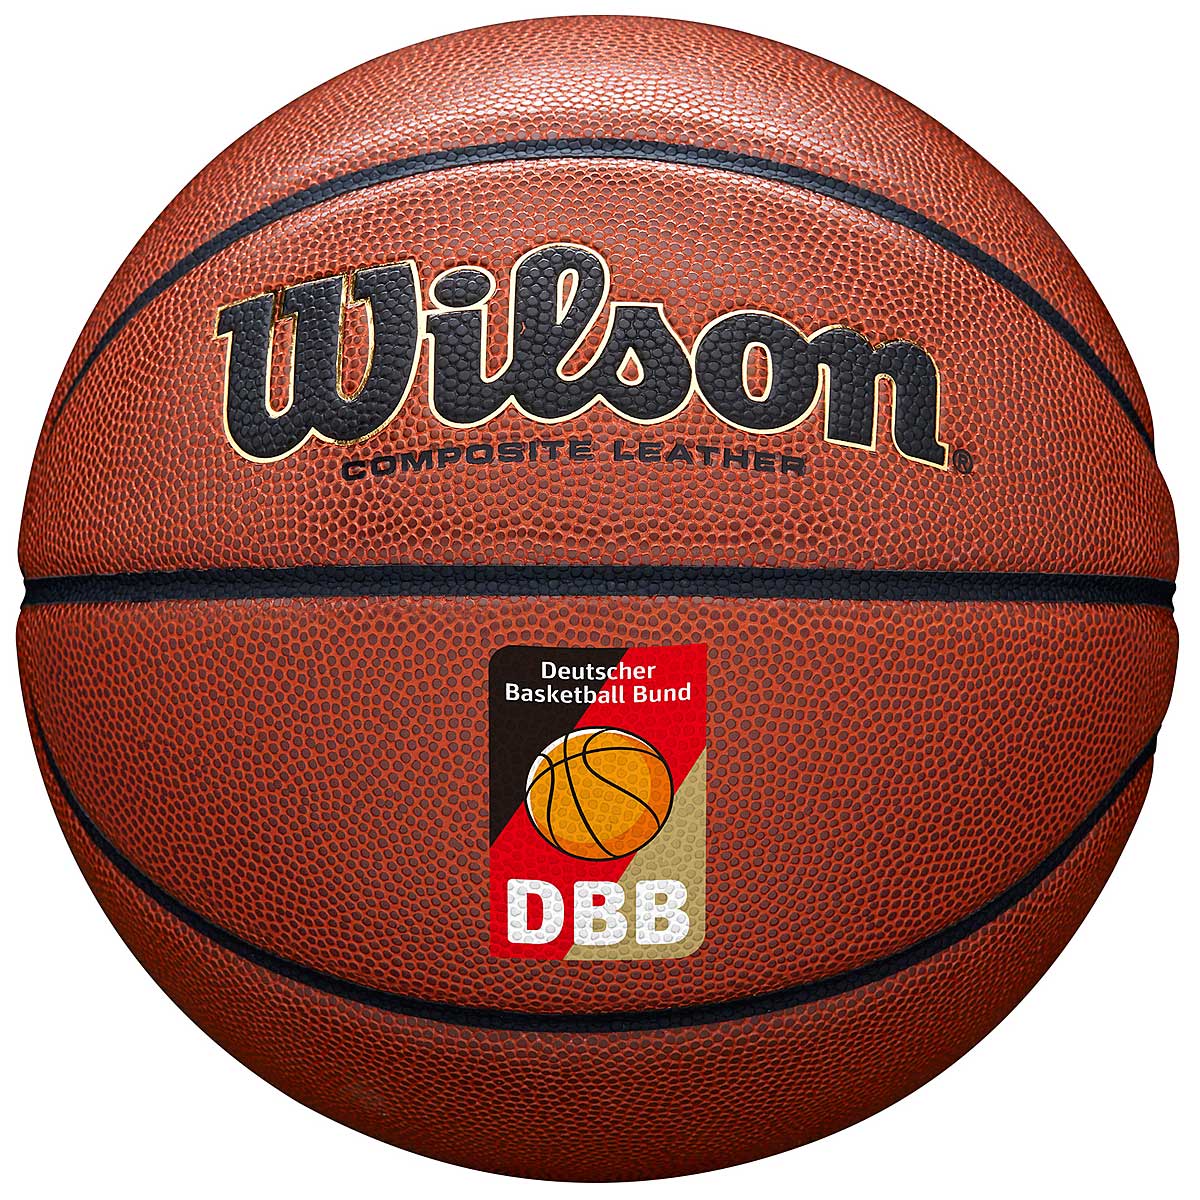 Image of Wilson Reaction Pro Basketball Dbb, Orange